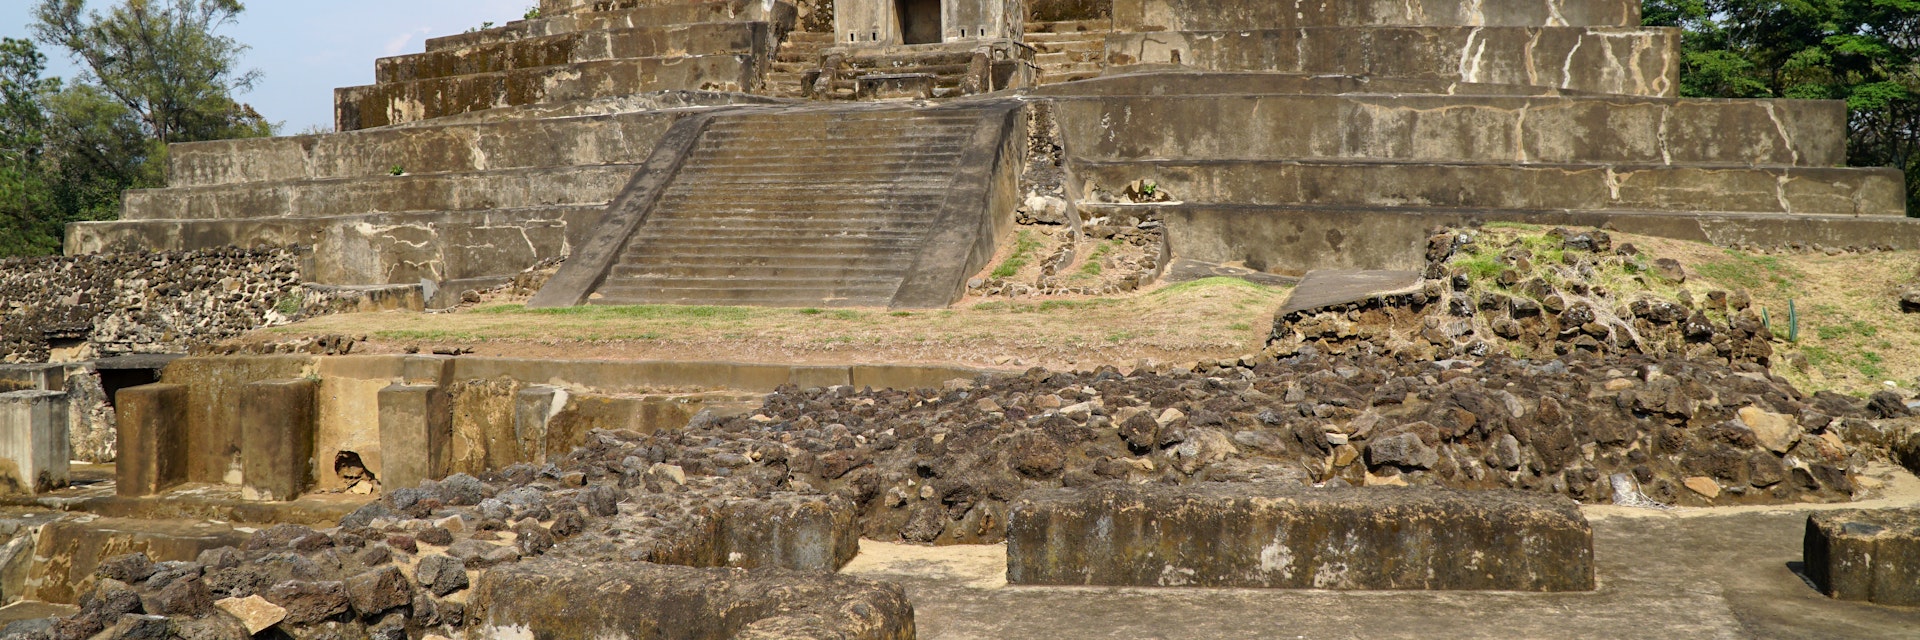 Tazumal Mayan Ruins in El Salvador, Santa Ana